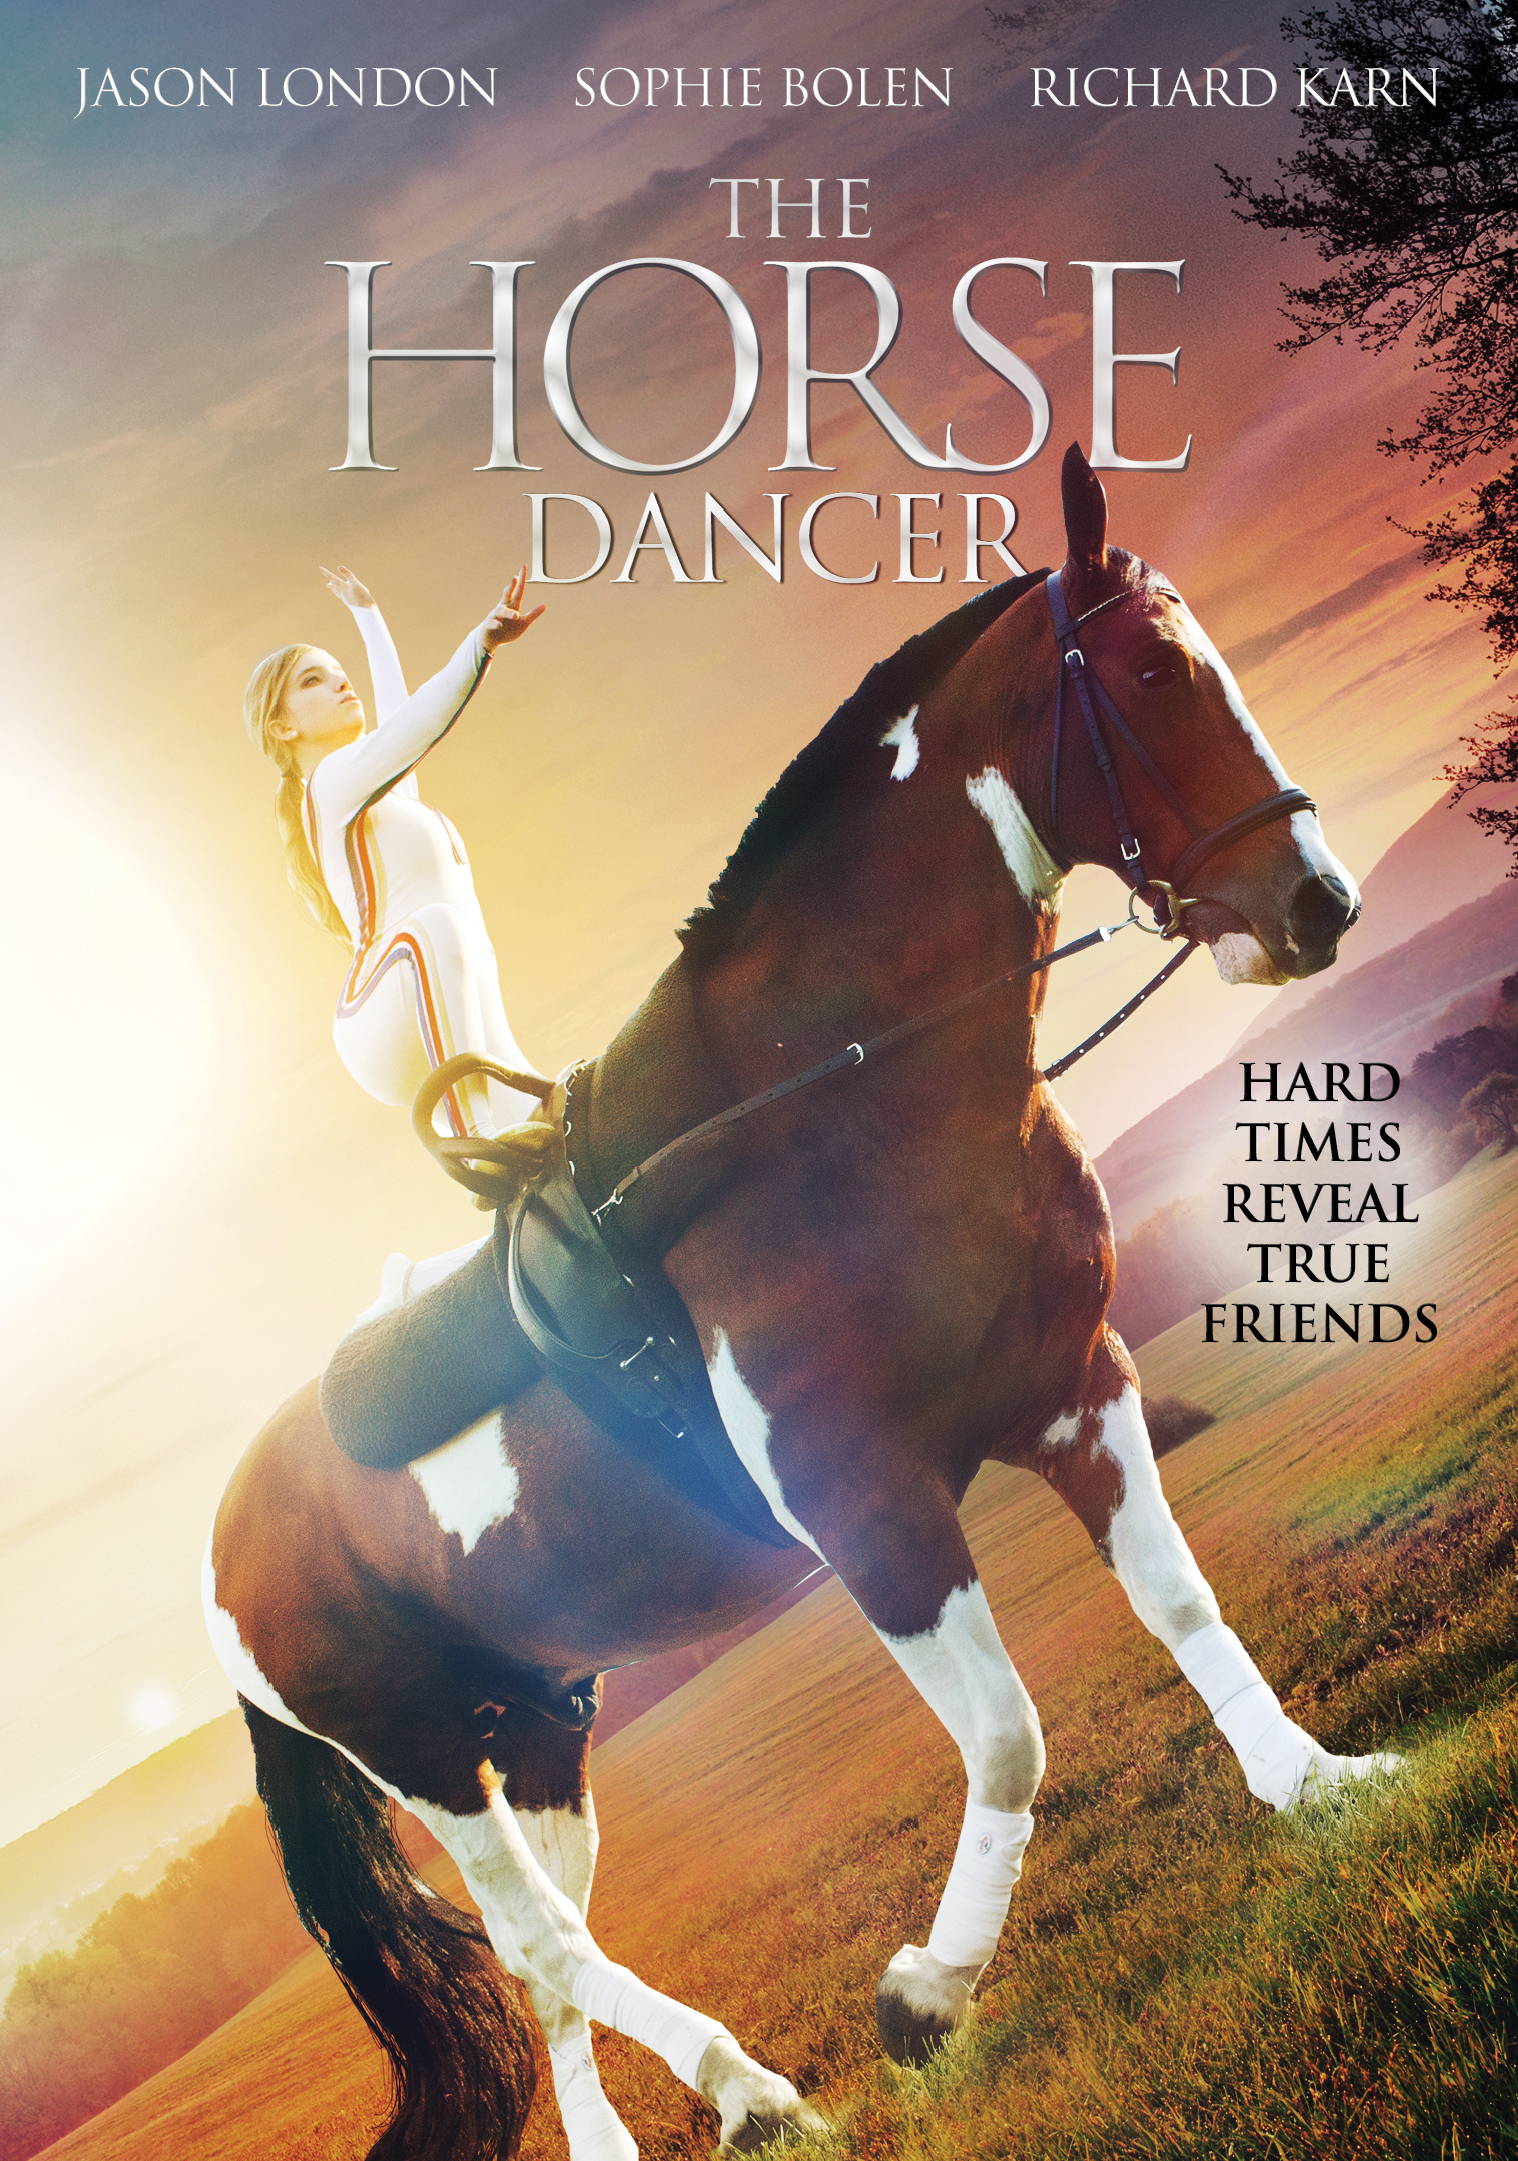 Nonton film The Horse Dancer layarkaca21 indoxx1 ganool online streaming terbaru